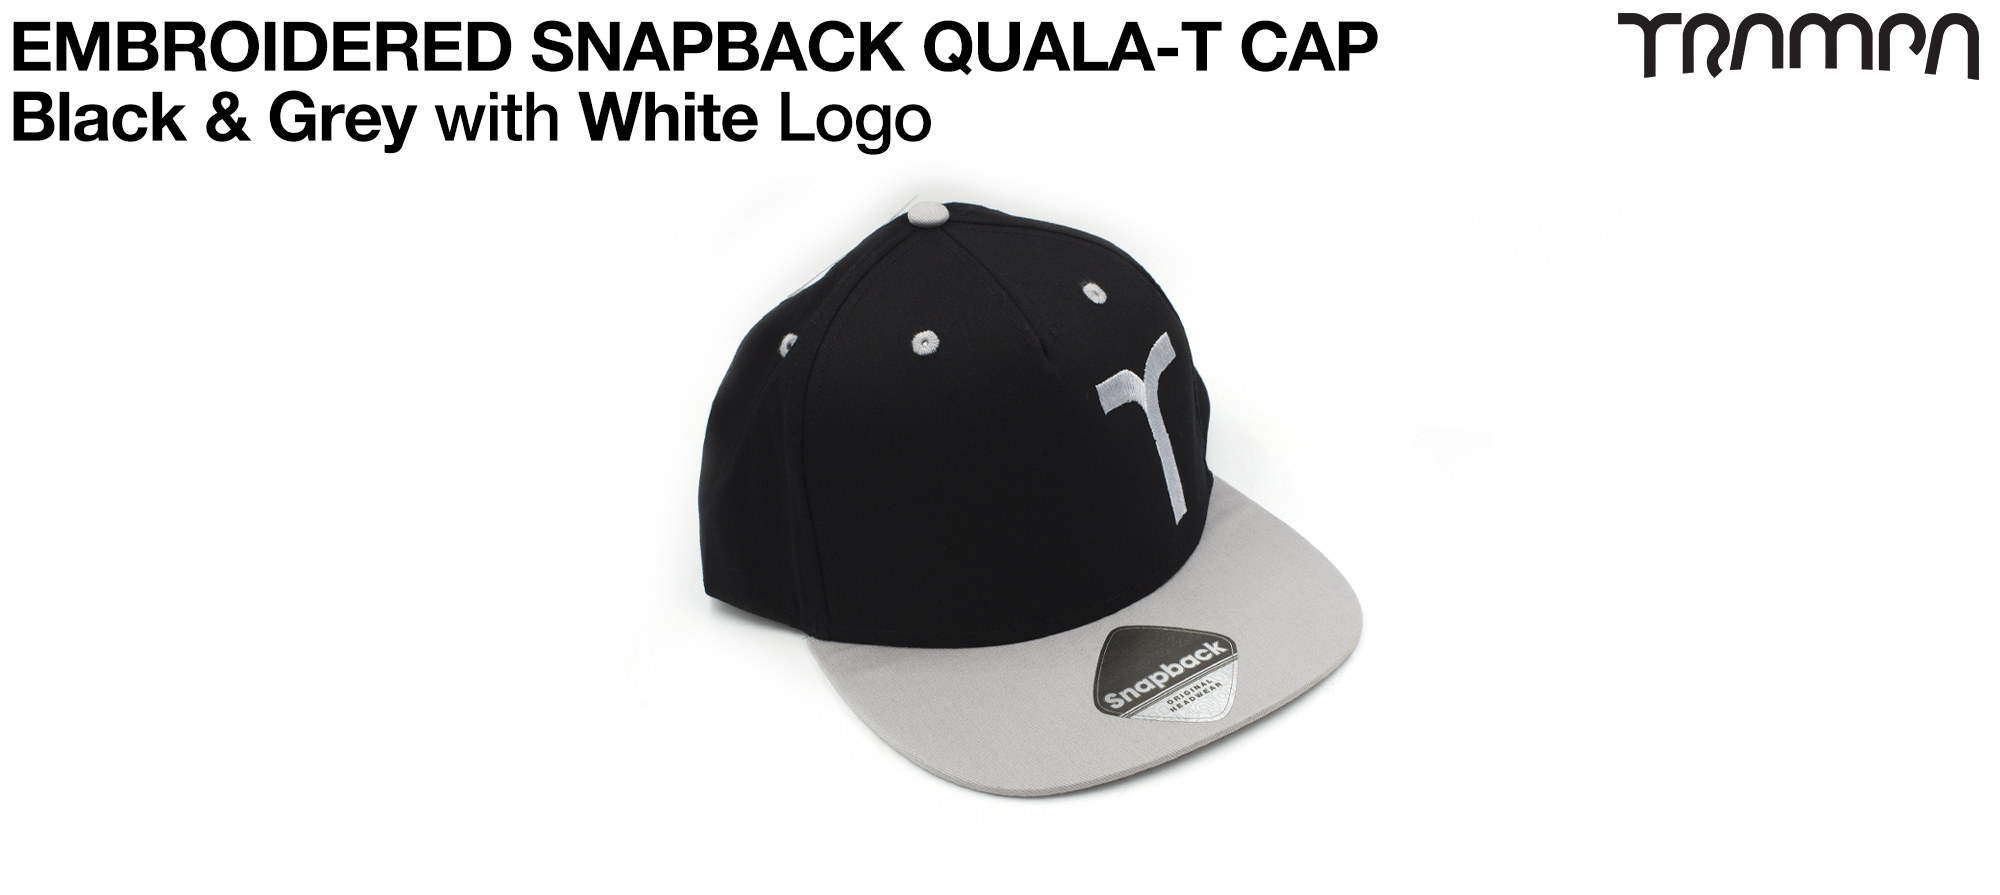 TWO Tone Black/Grey SNAPBACK Cap with Grey QUALA-T 